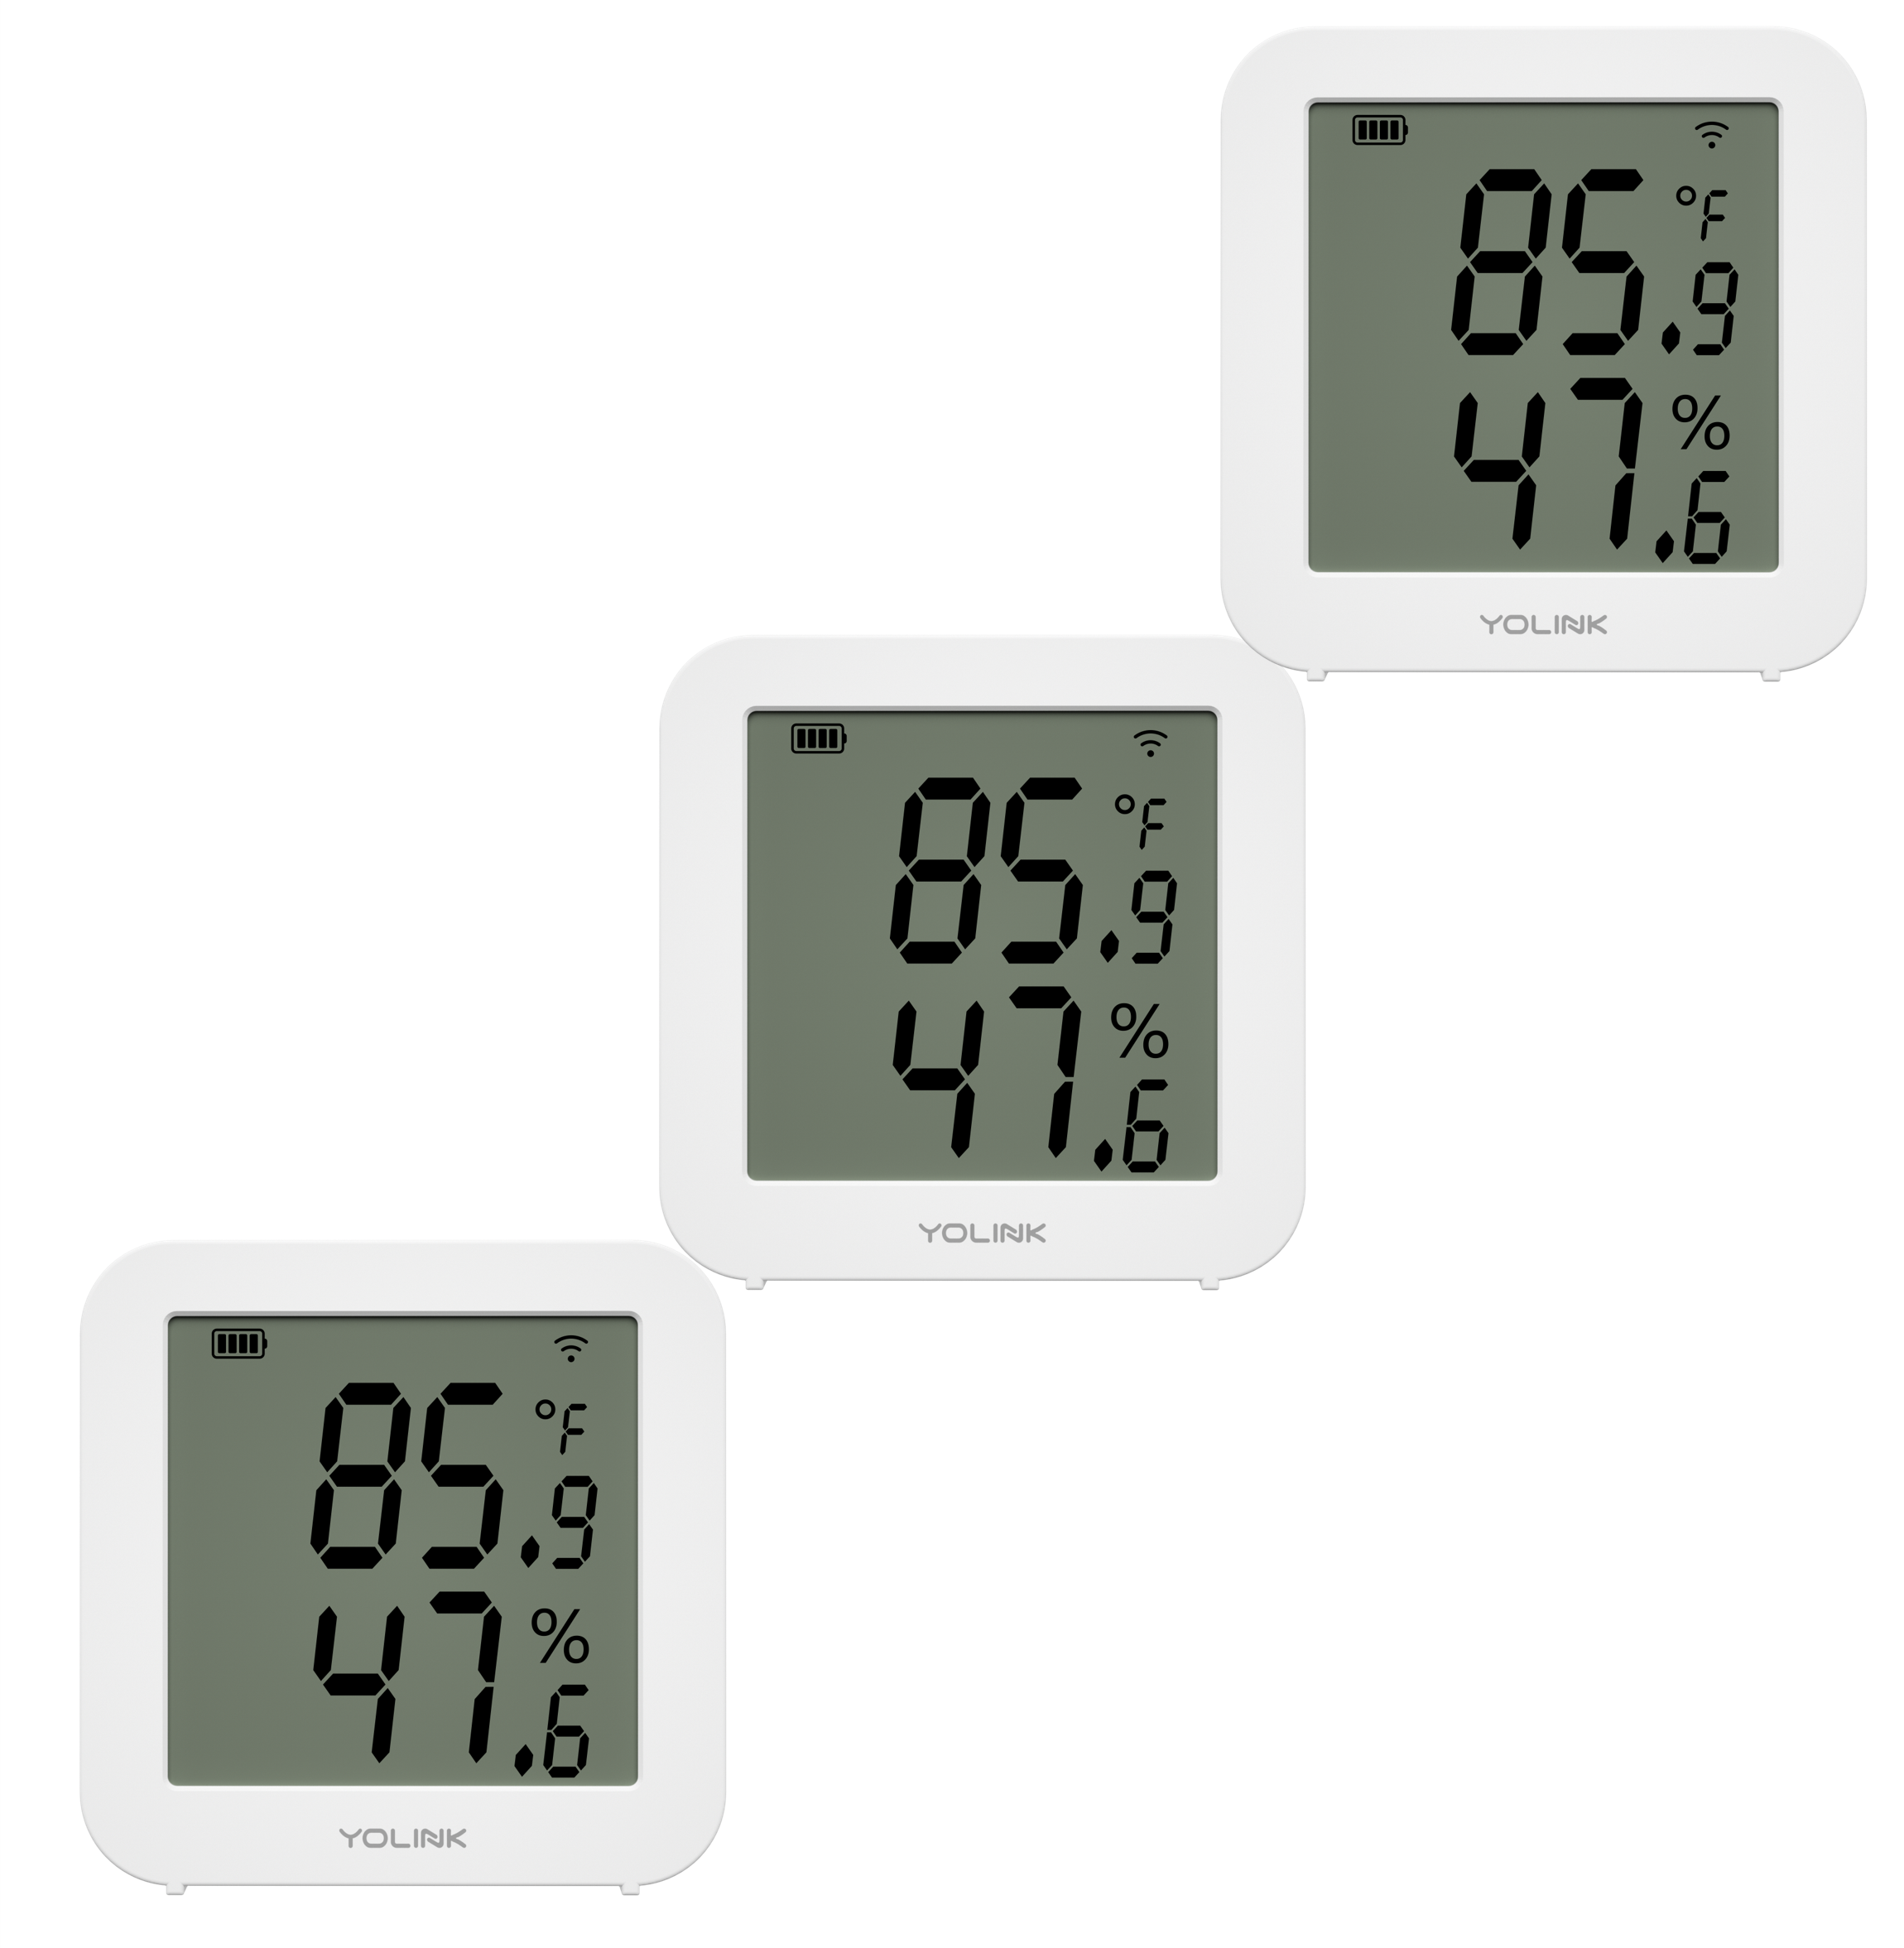 YoLink Smart Temperature Humidity Sensor